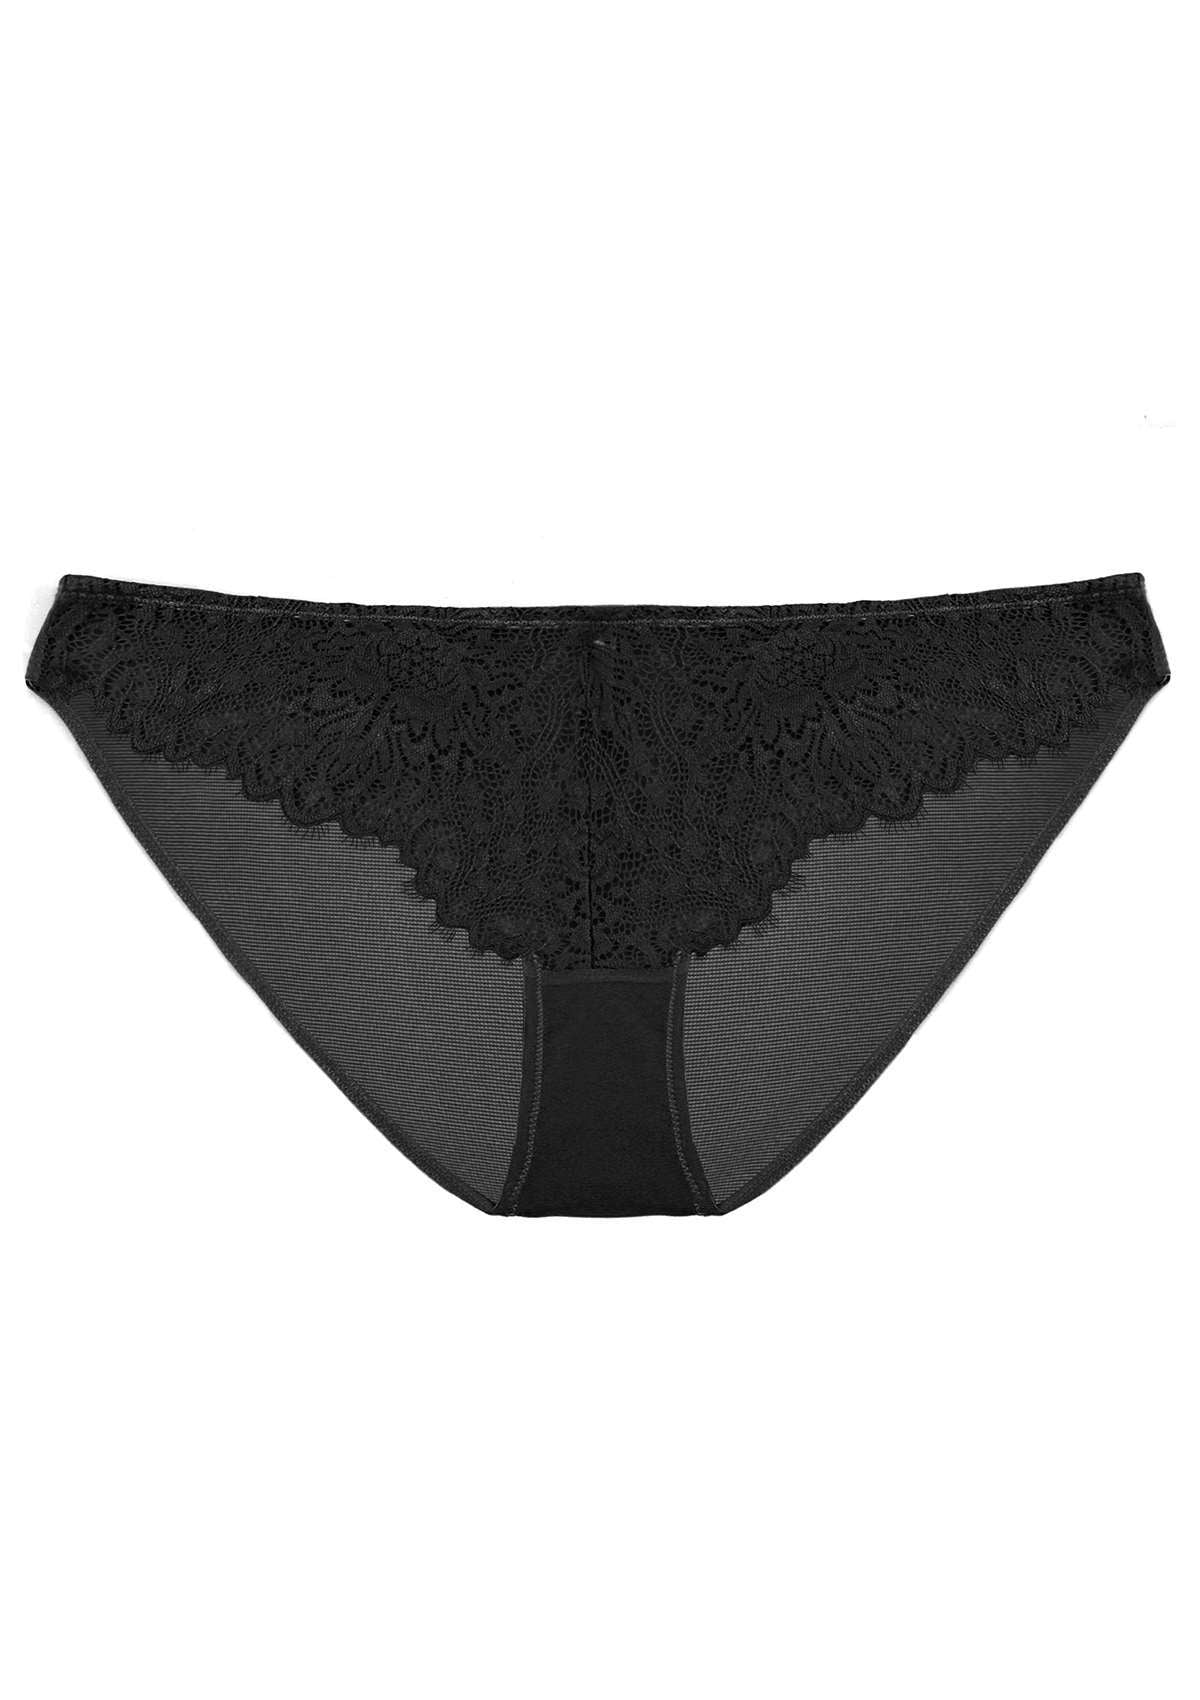 HSIA Sunflower Exquisite Black Bikini Lace Underwear - XL / High-Rise Brief / Black